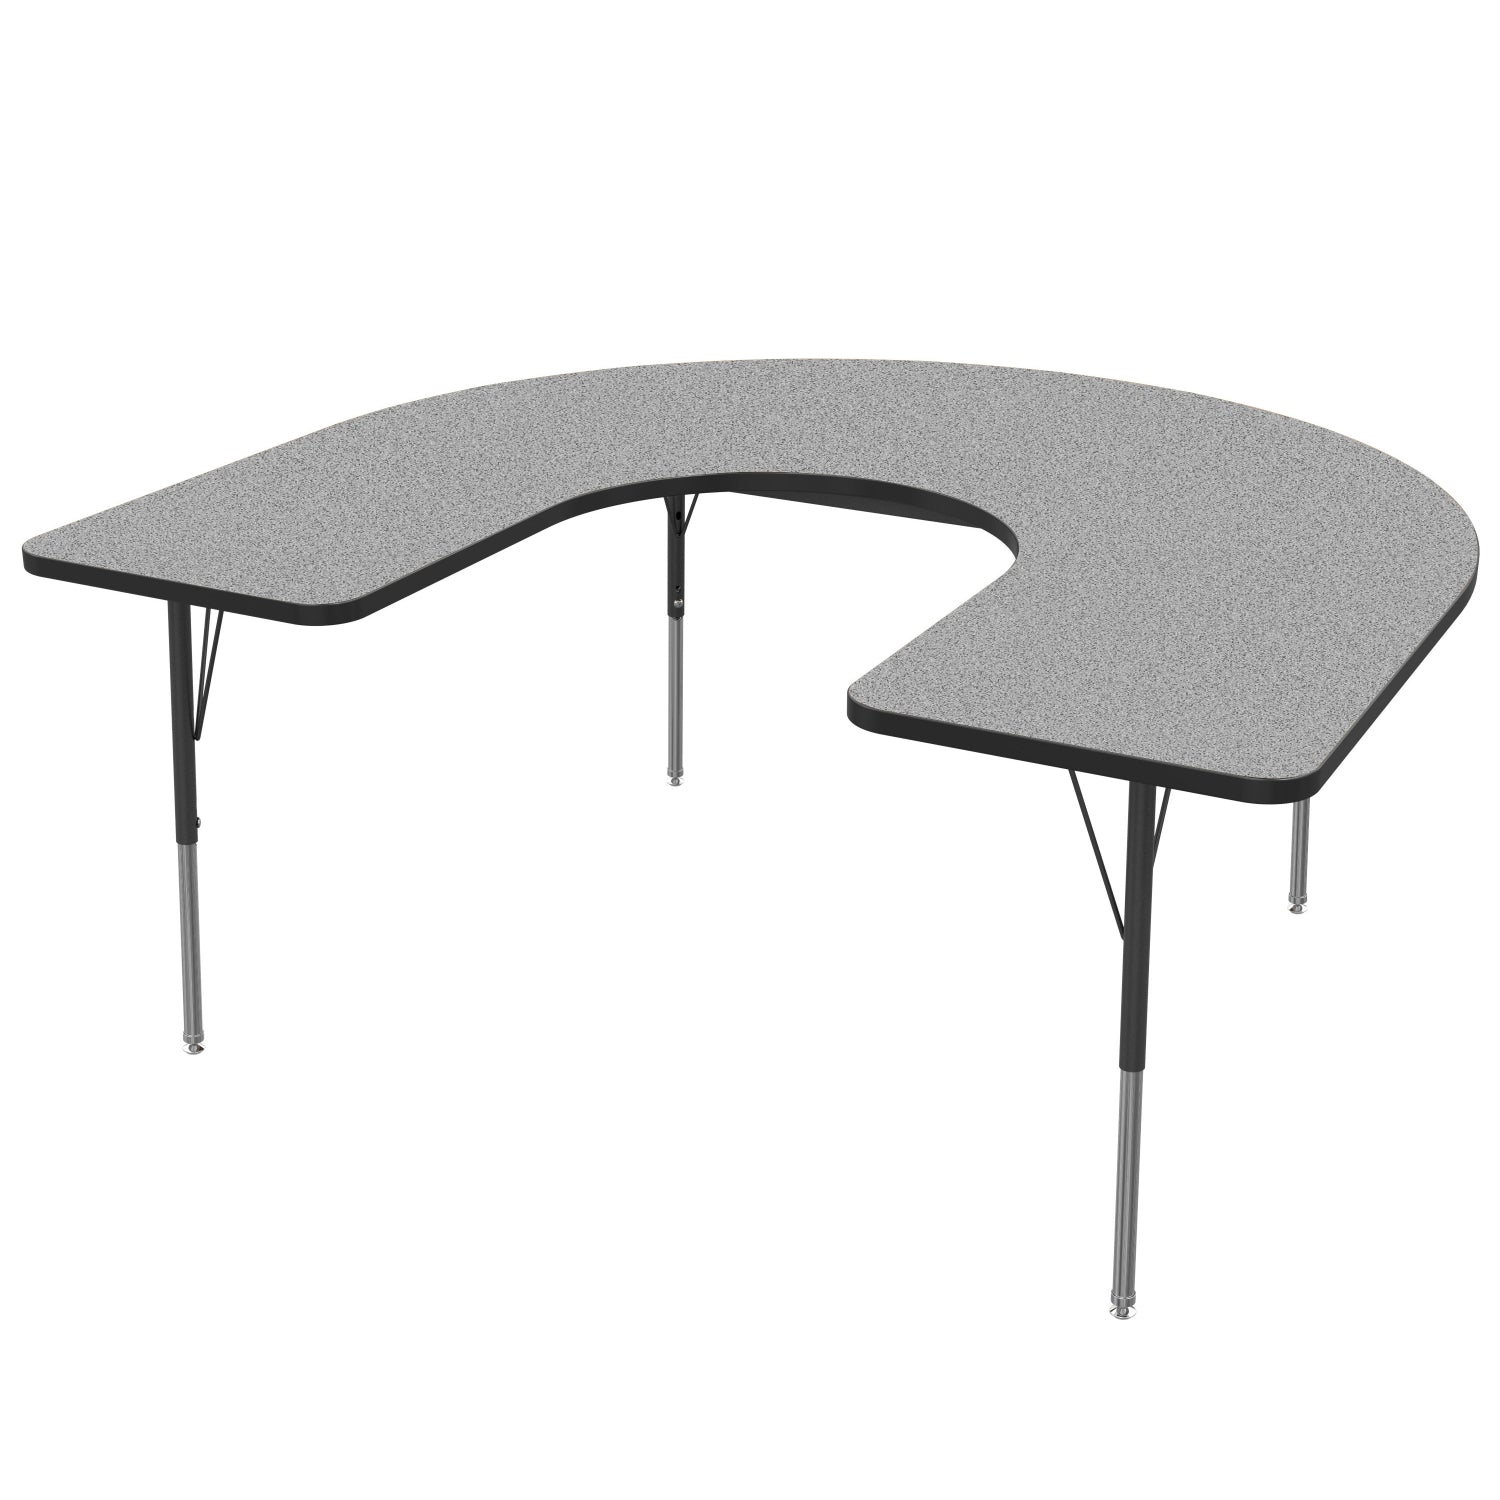 60x66 Blue Horseshoe-Shaped Table